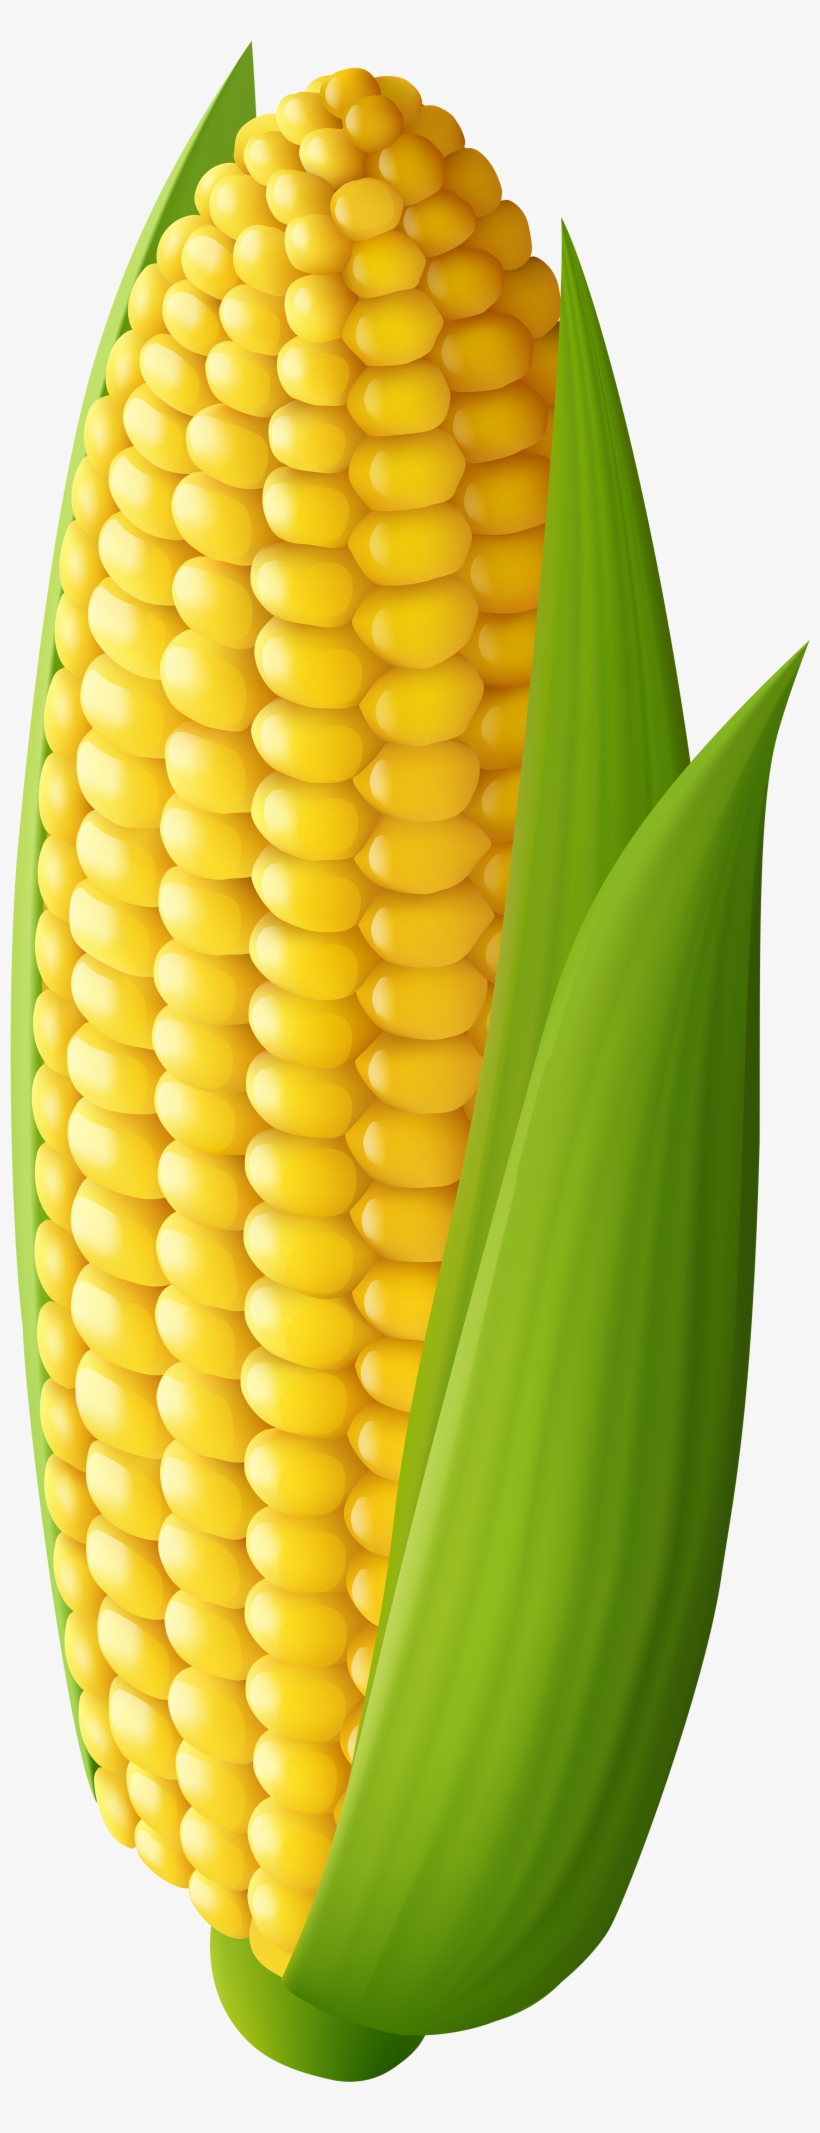 Corn Transparent Png Clip Art Image.